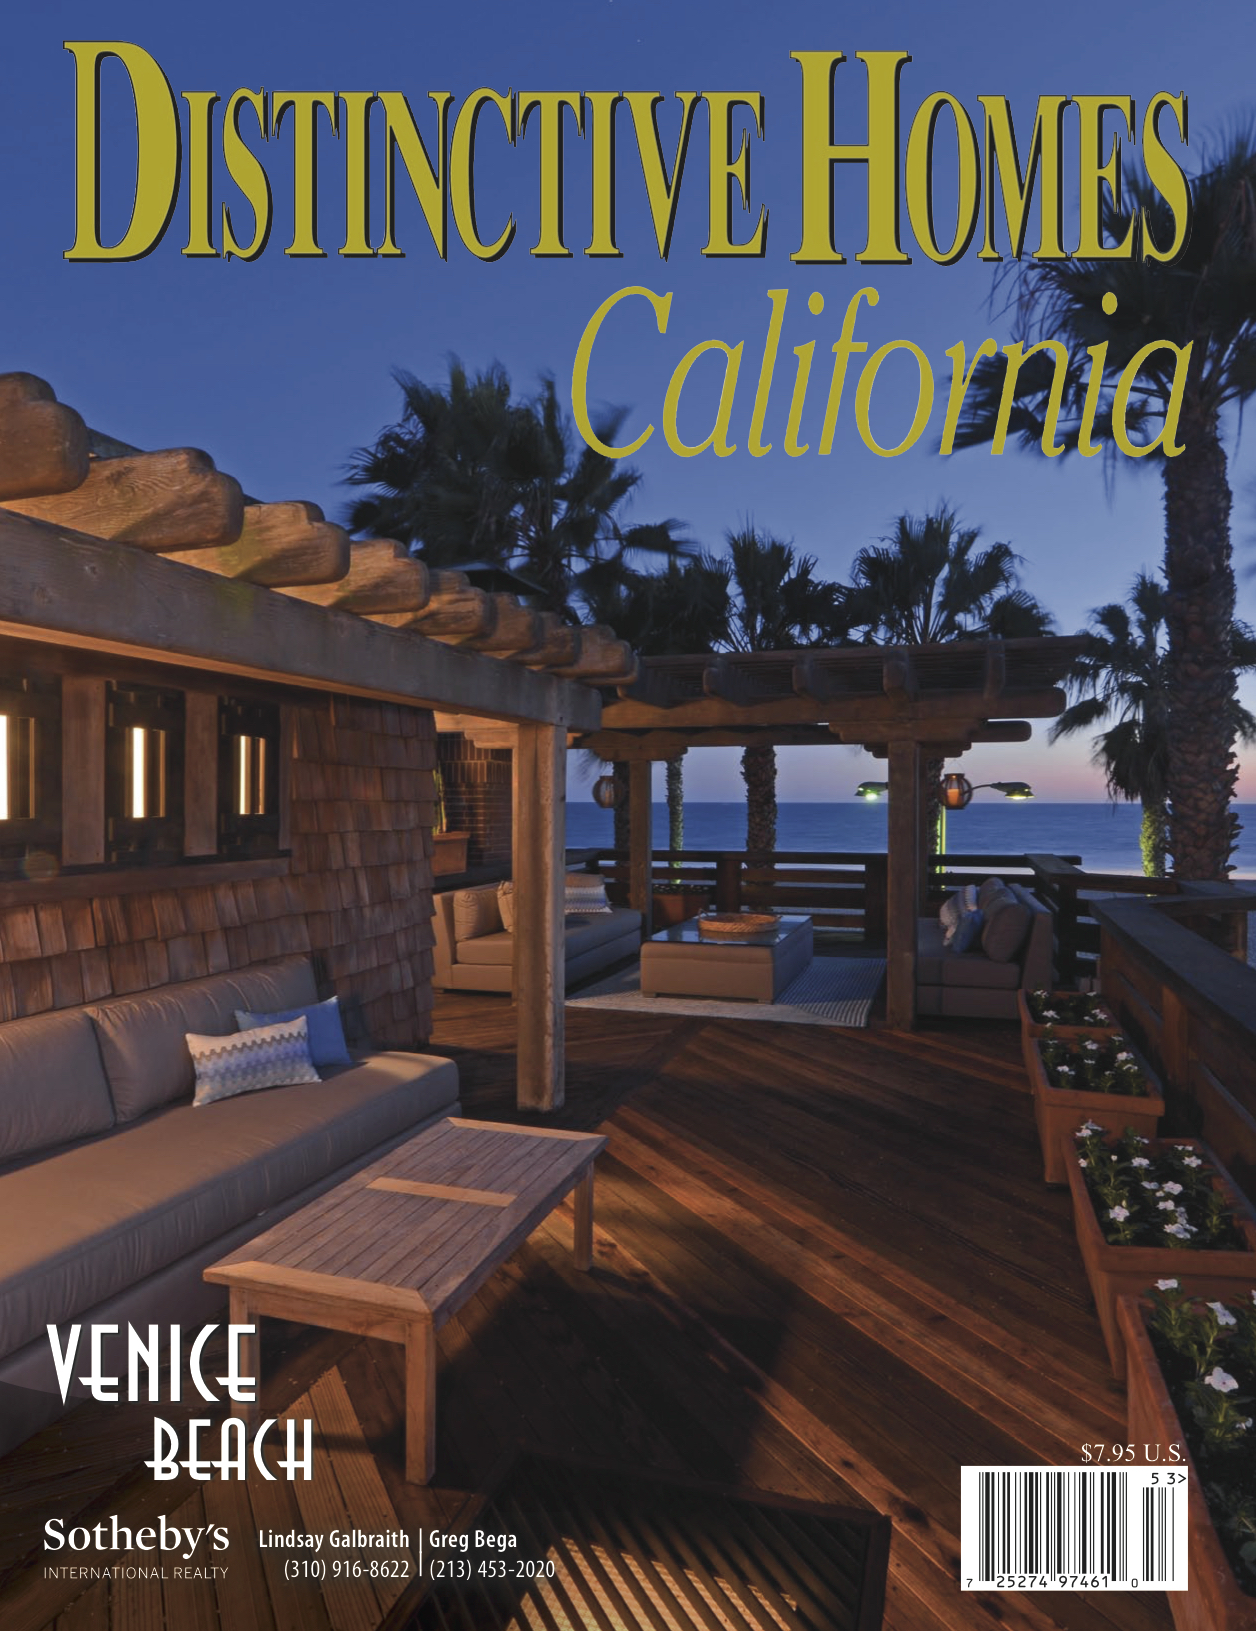 Distinctive Homes Cover.jpg